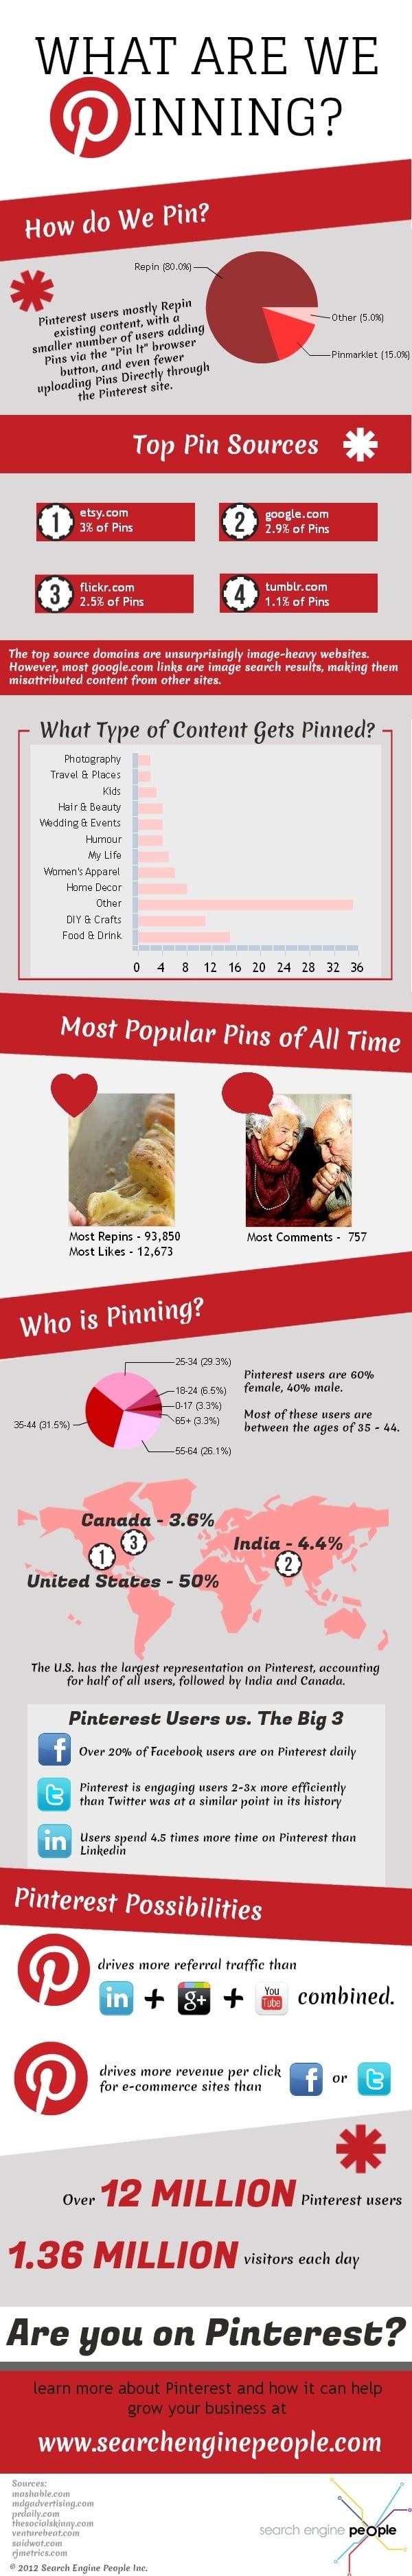 pinterest-update-usage-statistics-infographic